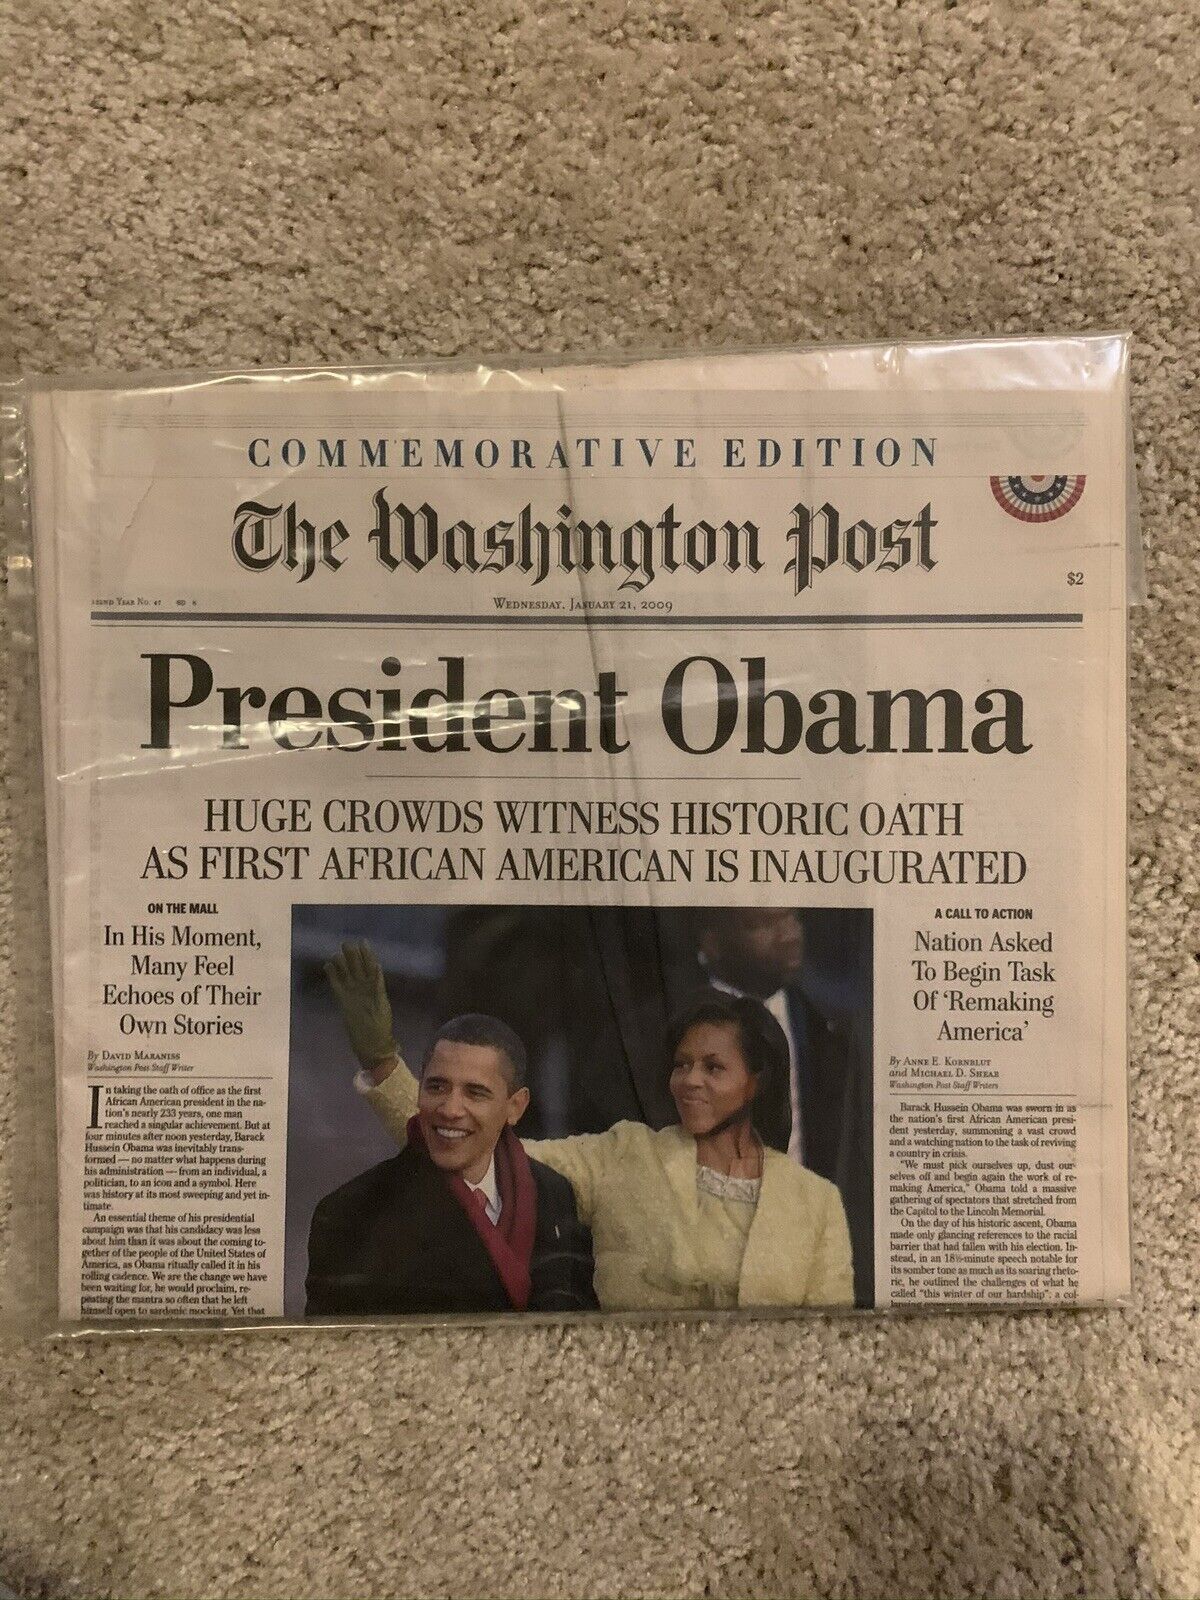 President Obama Elected/Inaugurated Washington Post Commemorative Newspaper